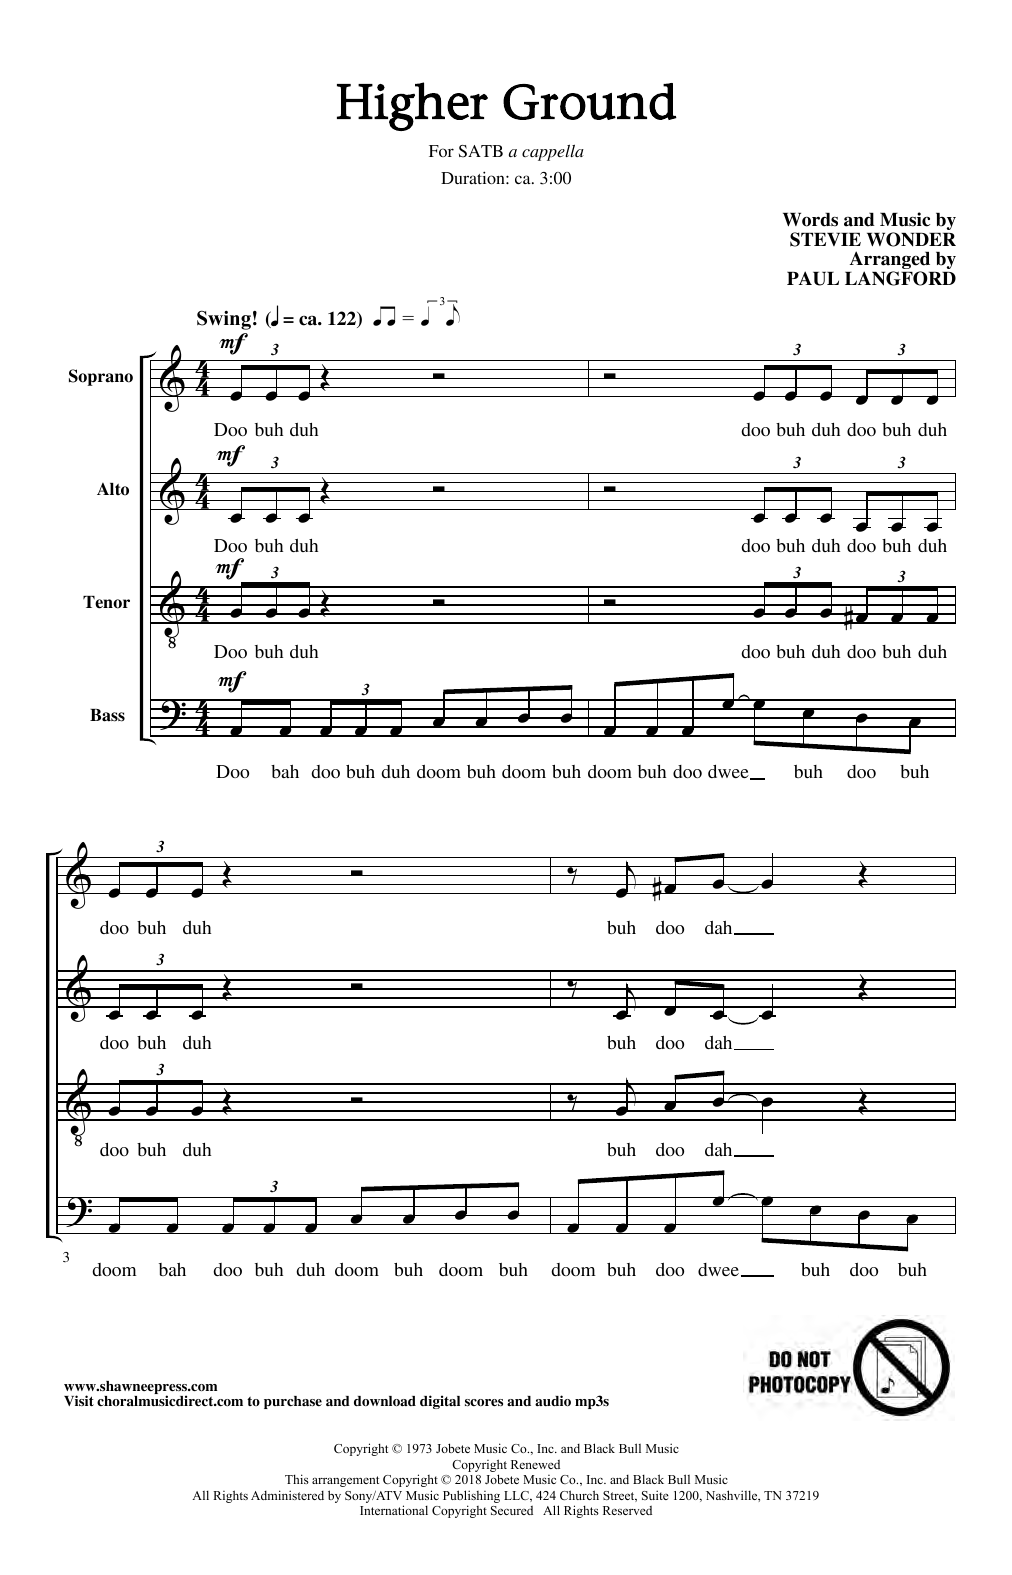 Stevie Wonder Higher Ground (arr. Paul Langford) Sheet Music Notes & Chords for SATB Choir - Download or Print PDF